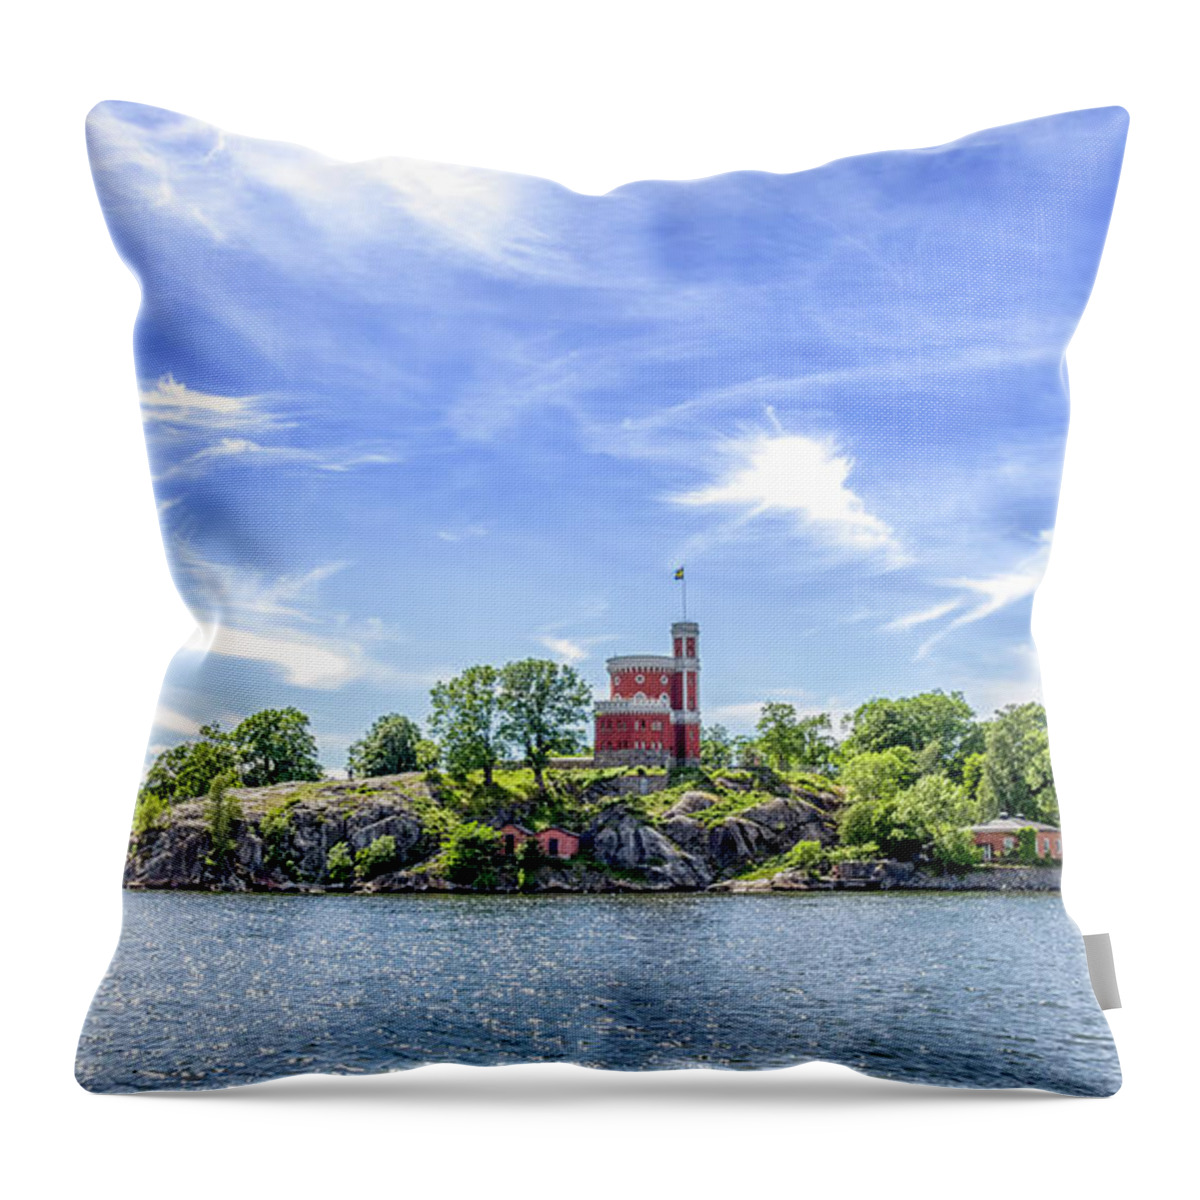 Landmark Throw Pillow featuring the photograph Kastellholmen stockholm by Stelios Kleanthous